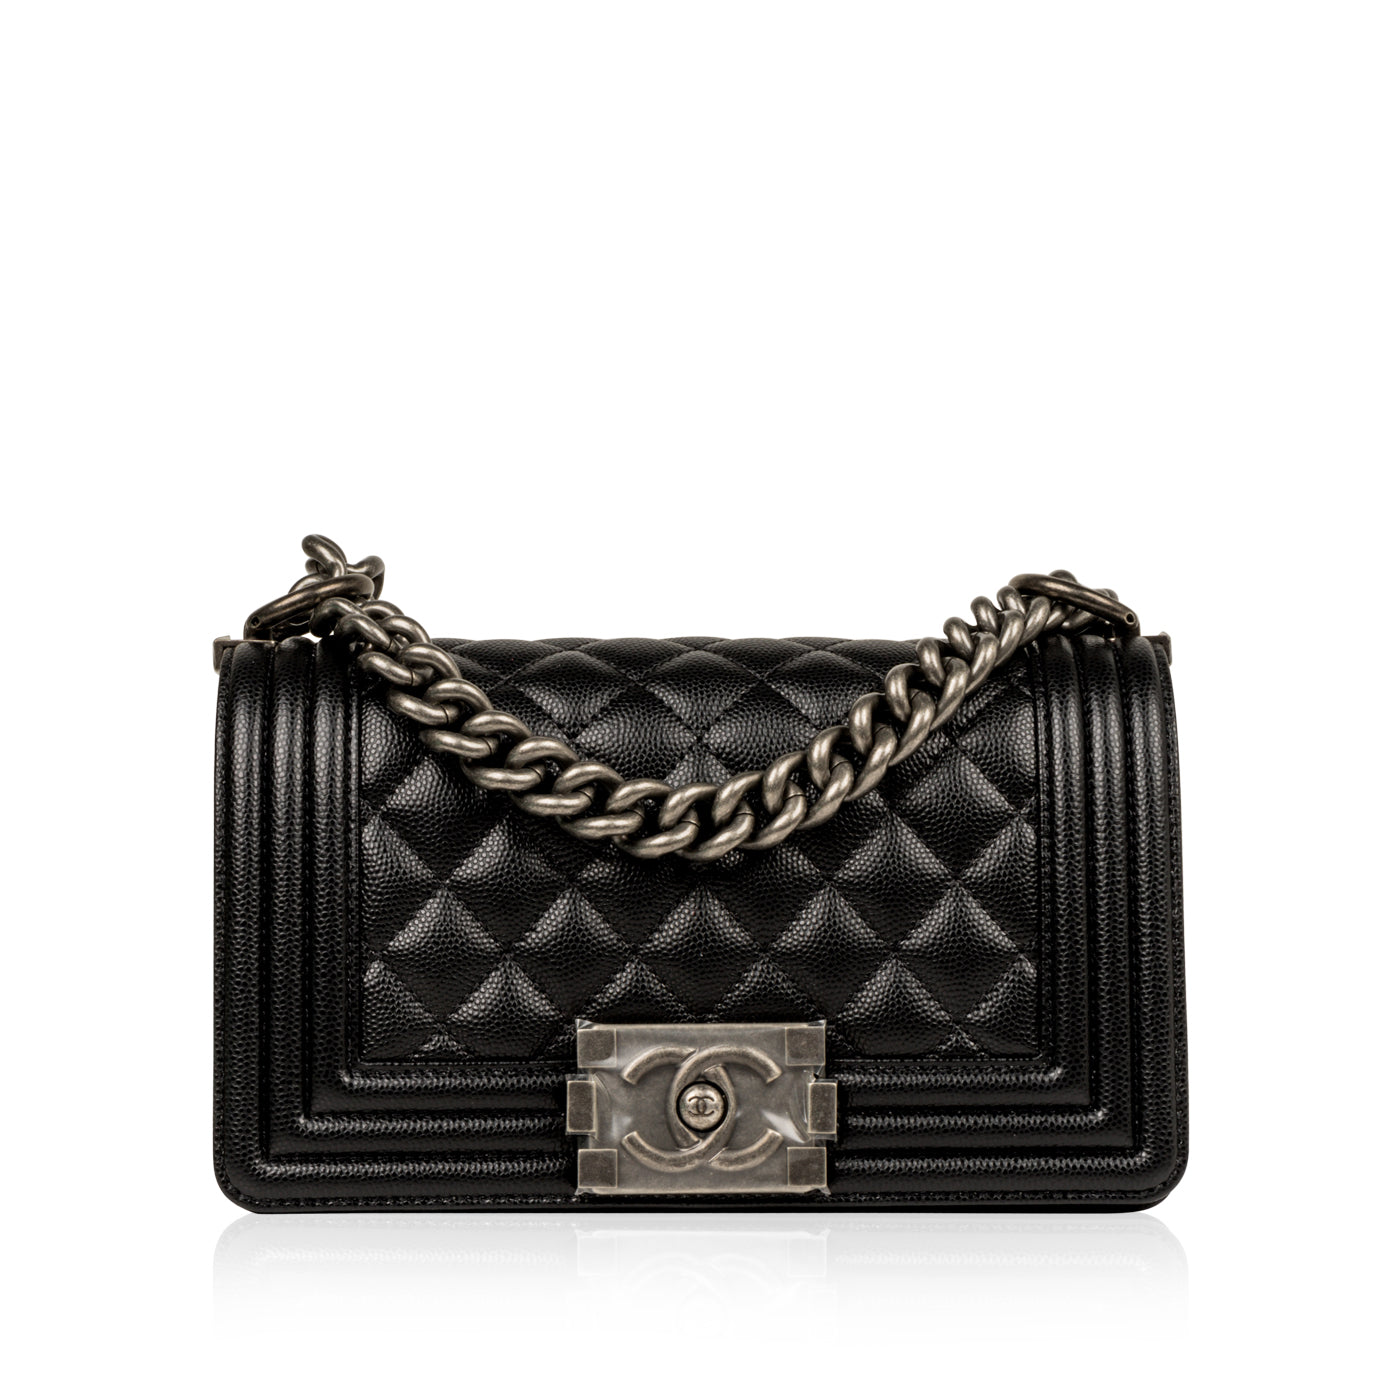 Chanel - Small Boy Bag - Black Caviar Leather - Ruthenium Hardware ...